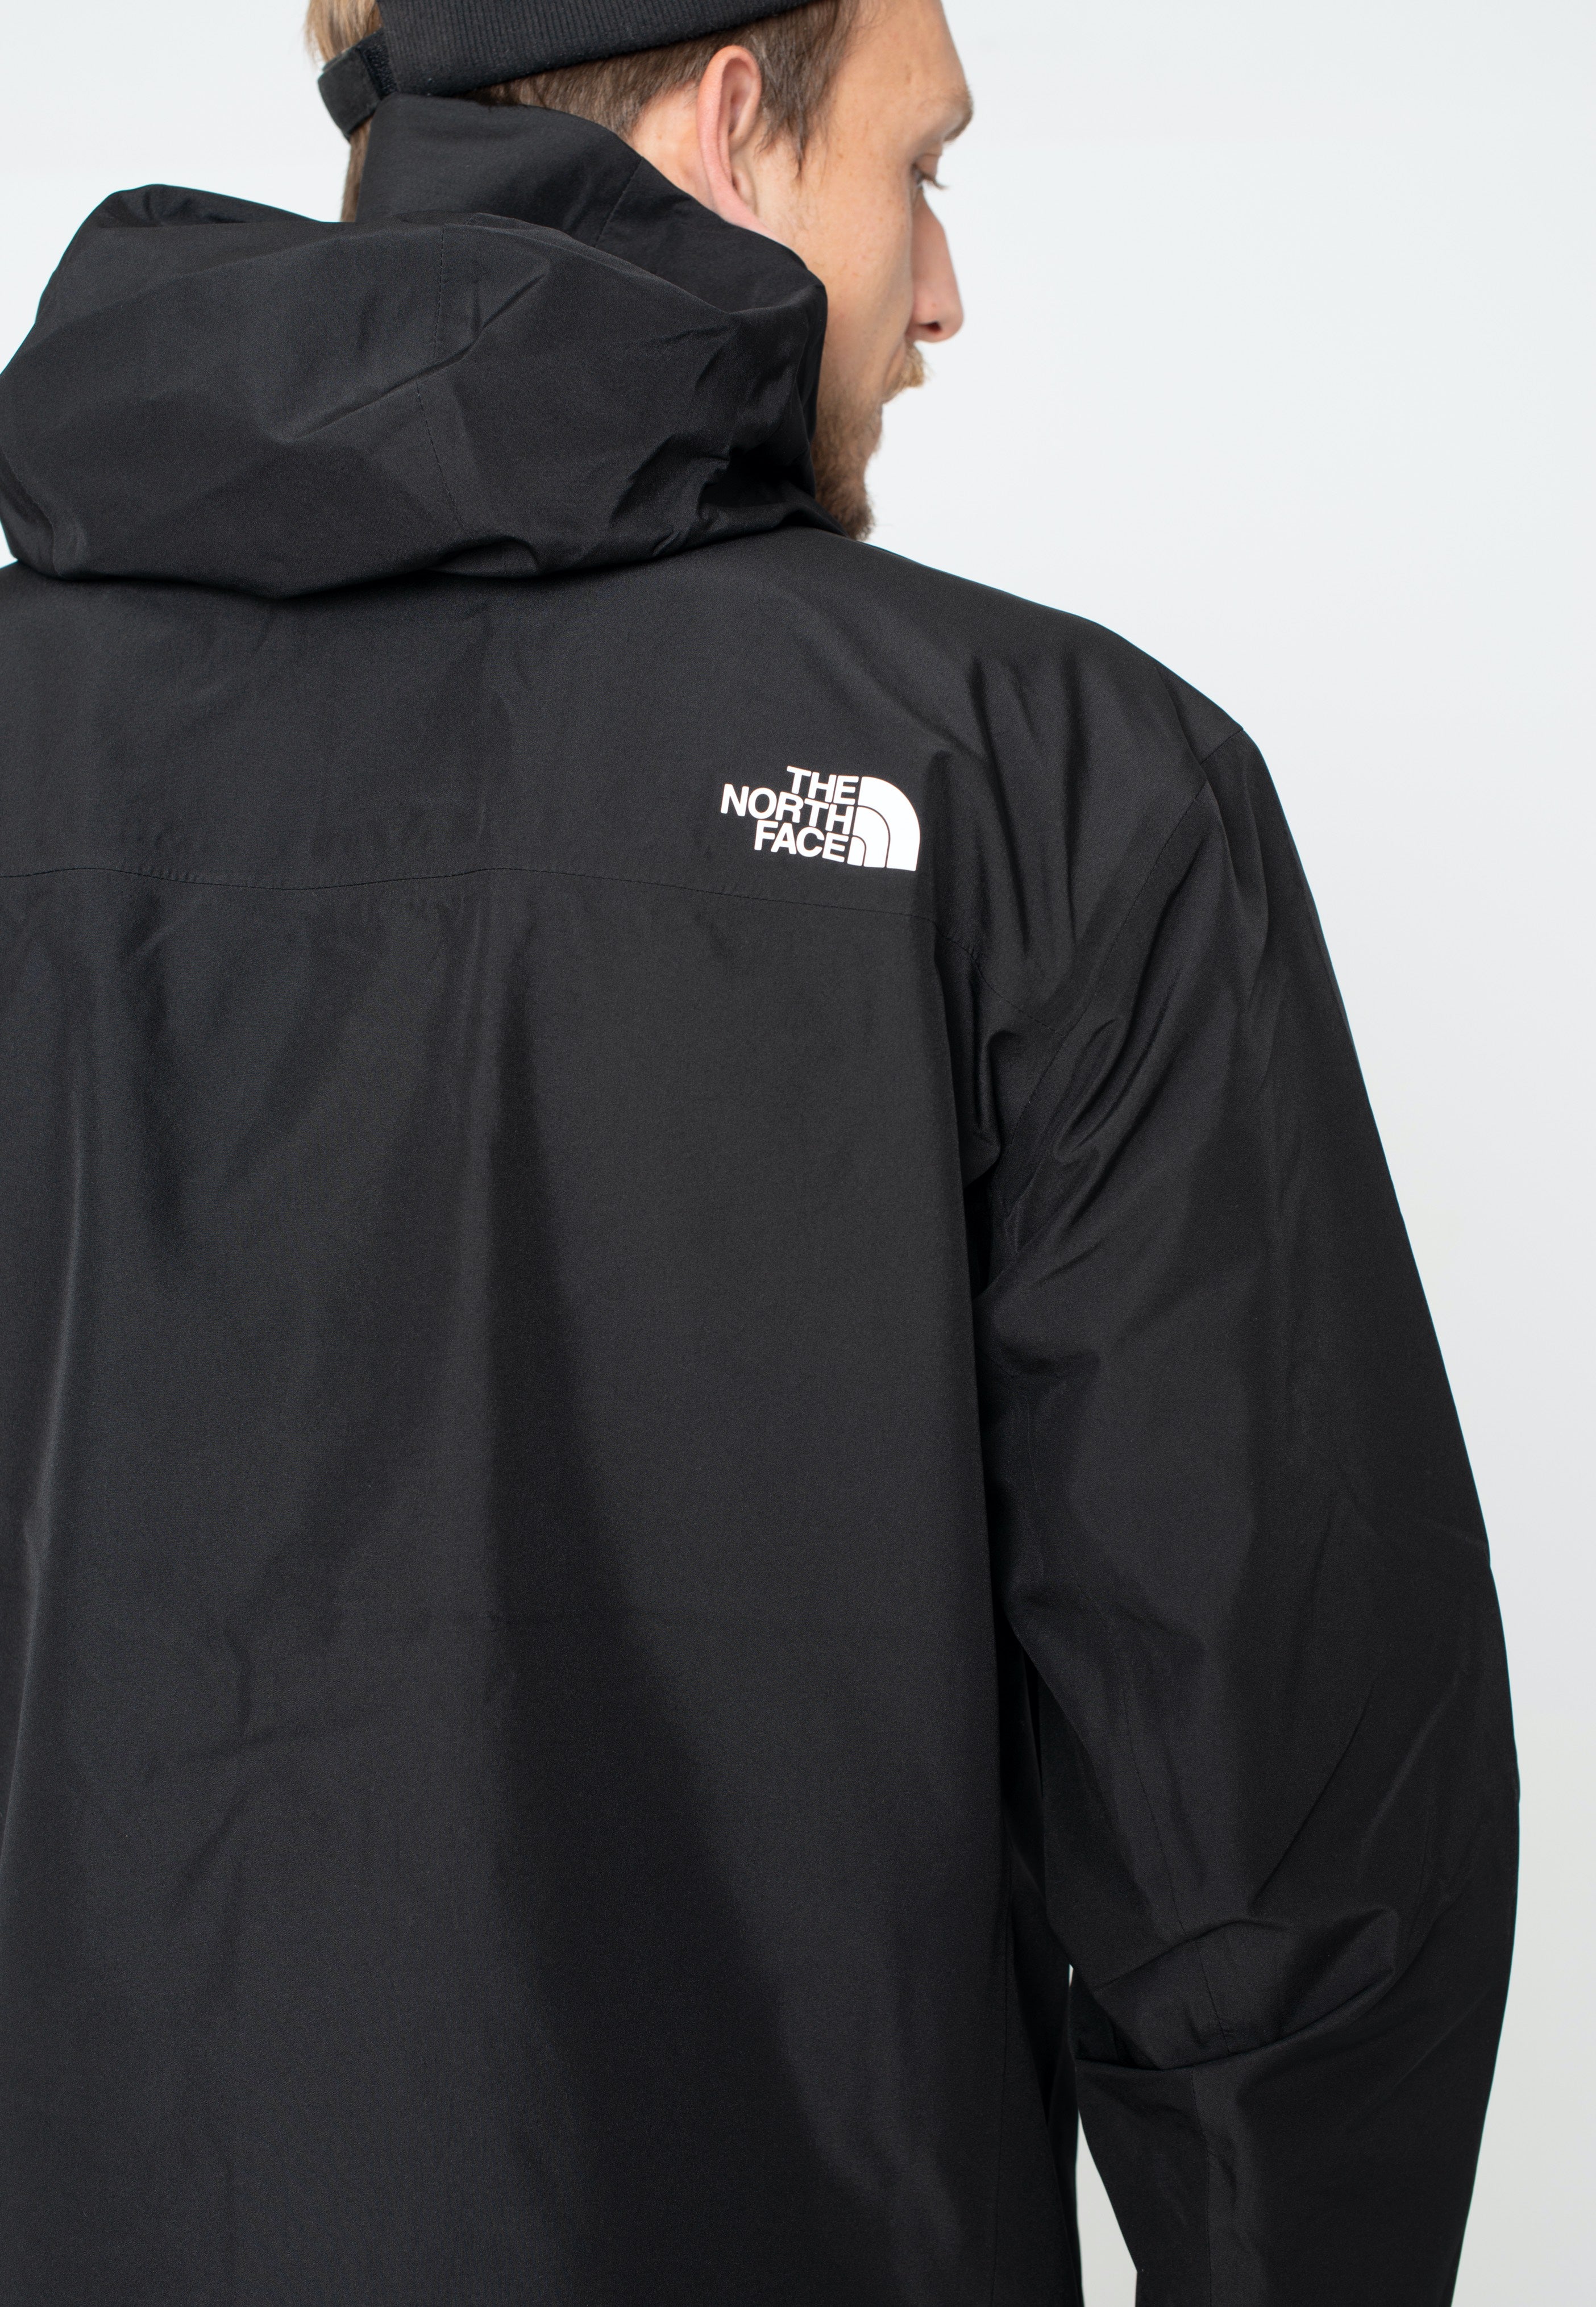 The North Face - Dryzzle Futurelight TNF Black - Jacket